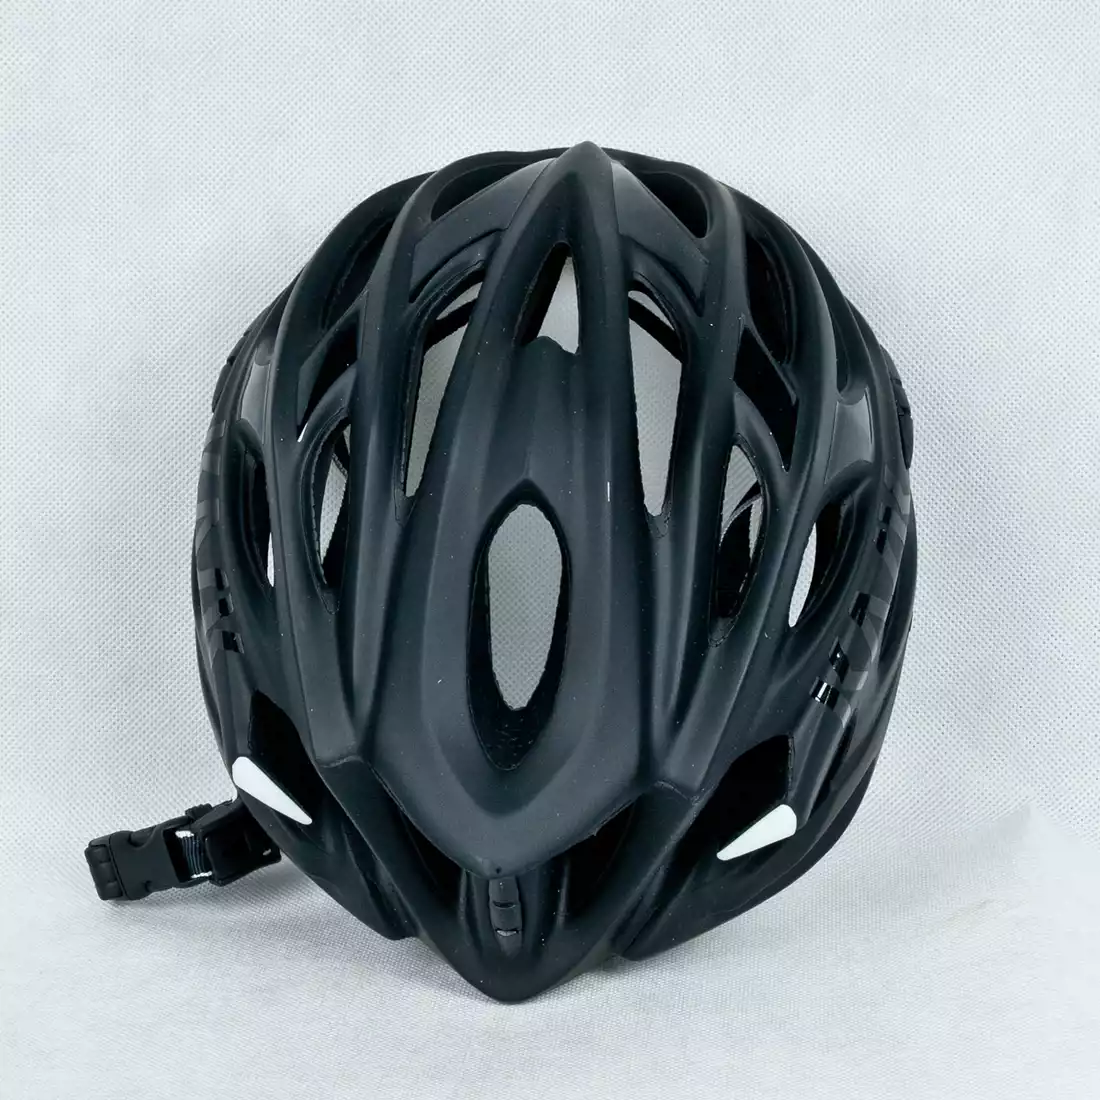 KASK MOJITO - kask rowerowy CHE00026.202 kolor:czarny mat